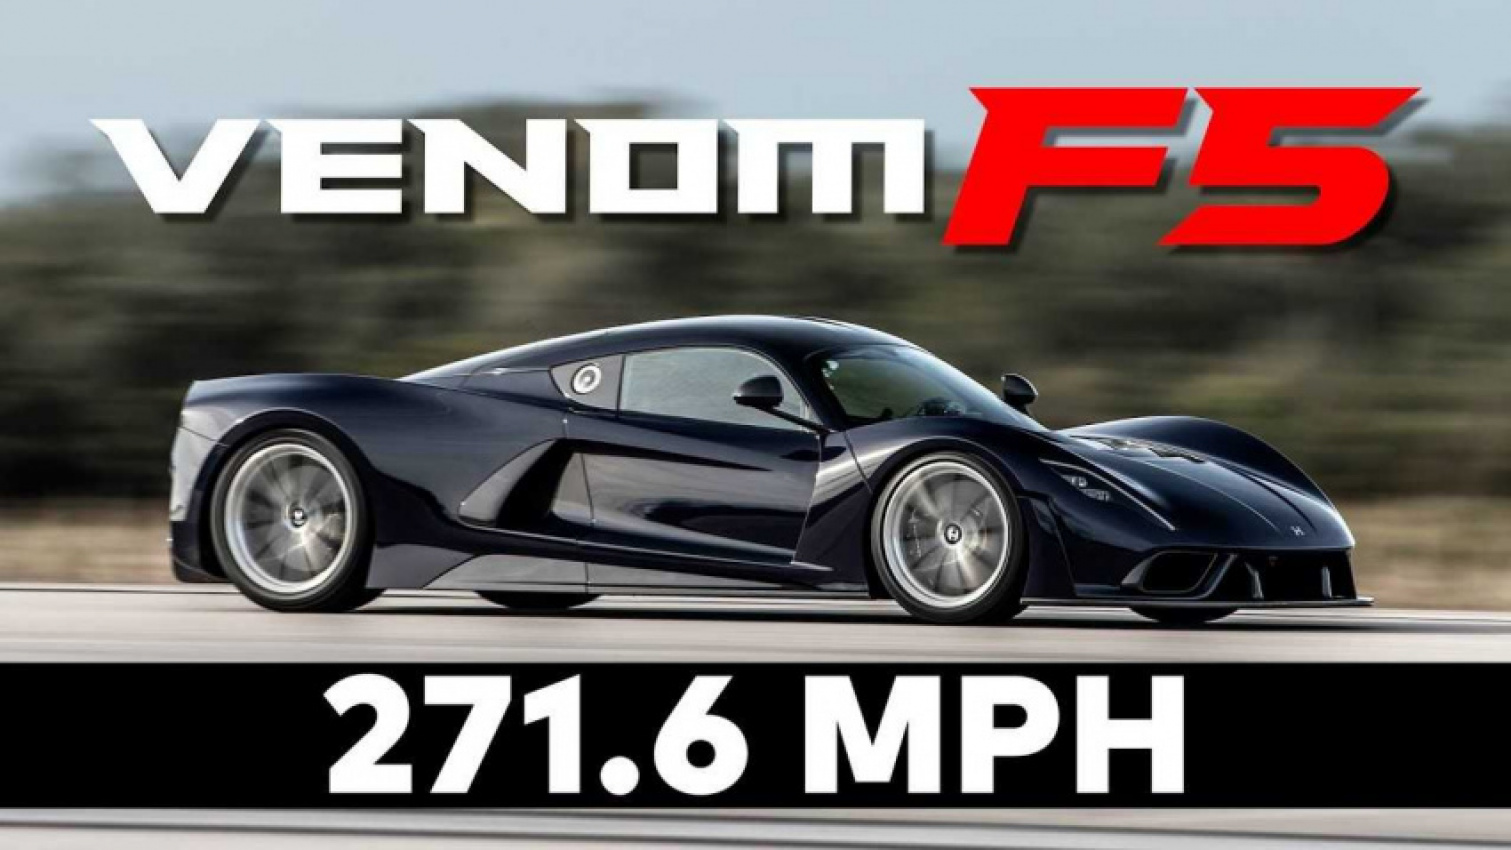 autos, cars, hennessey, hypercar, vnex, hennessey venom f5 hypercar hits 271.6 mph in the latest test